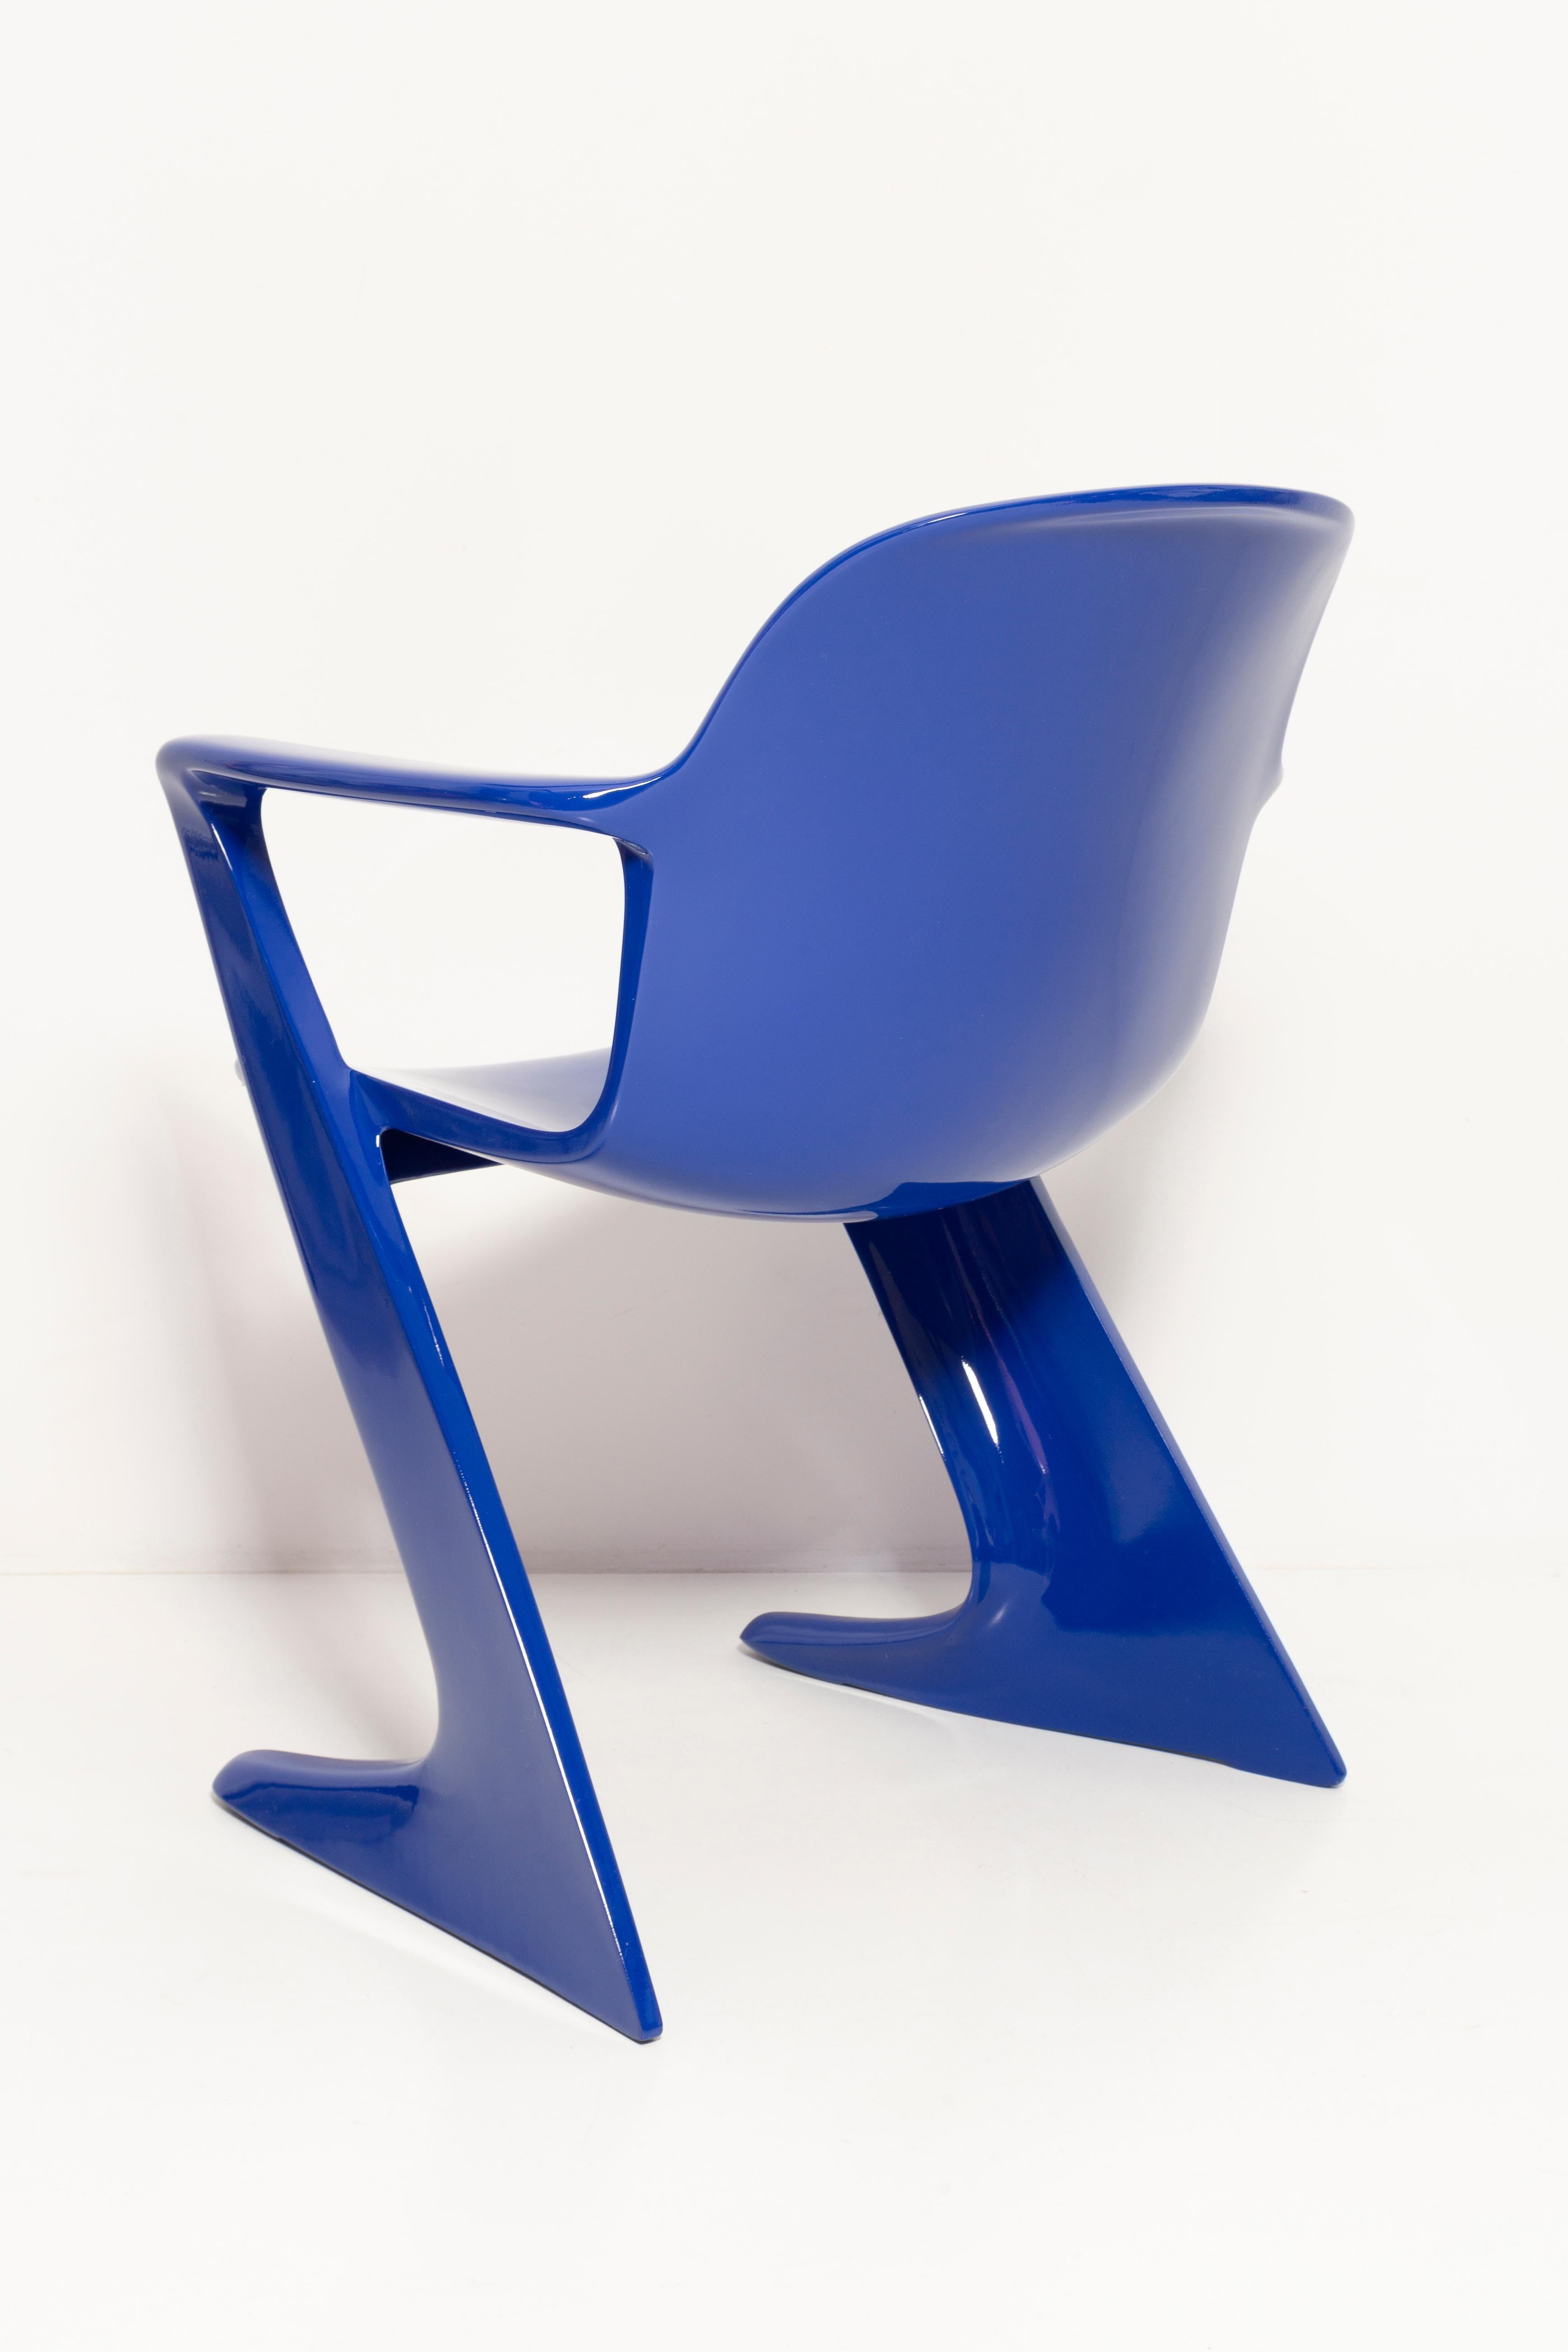 Fiberglass Ultramarine Blue Kangaroo Chair Designed by Ernst Moeckl, Germany, 1968 For Sale